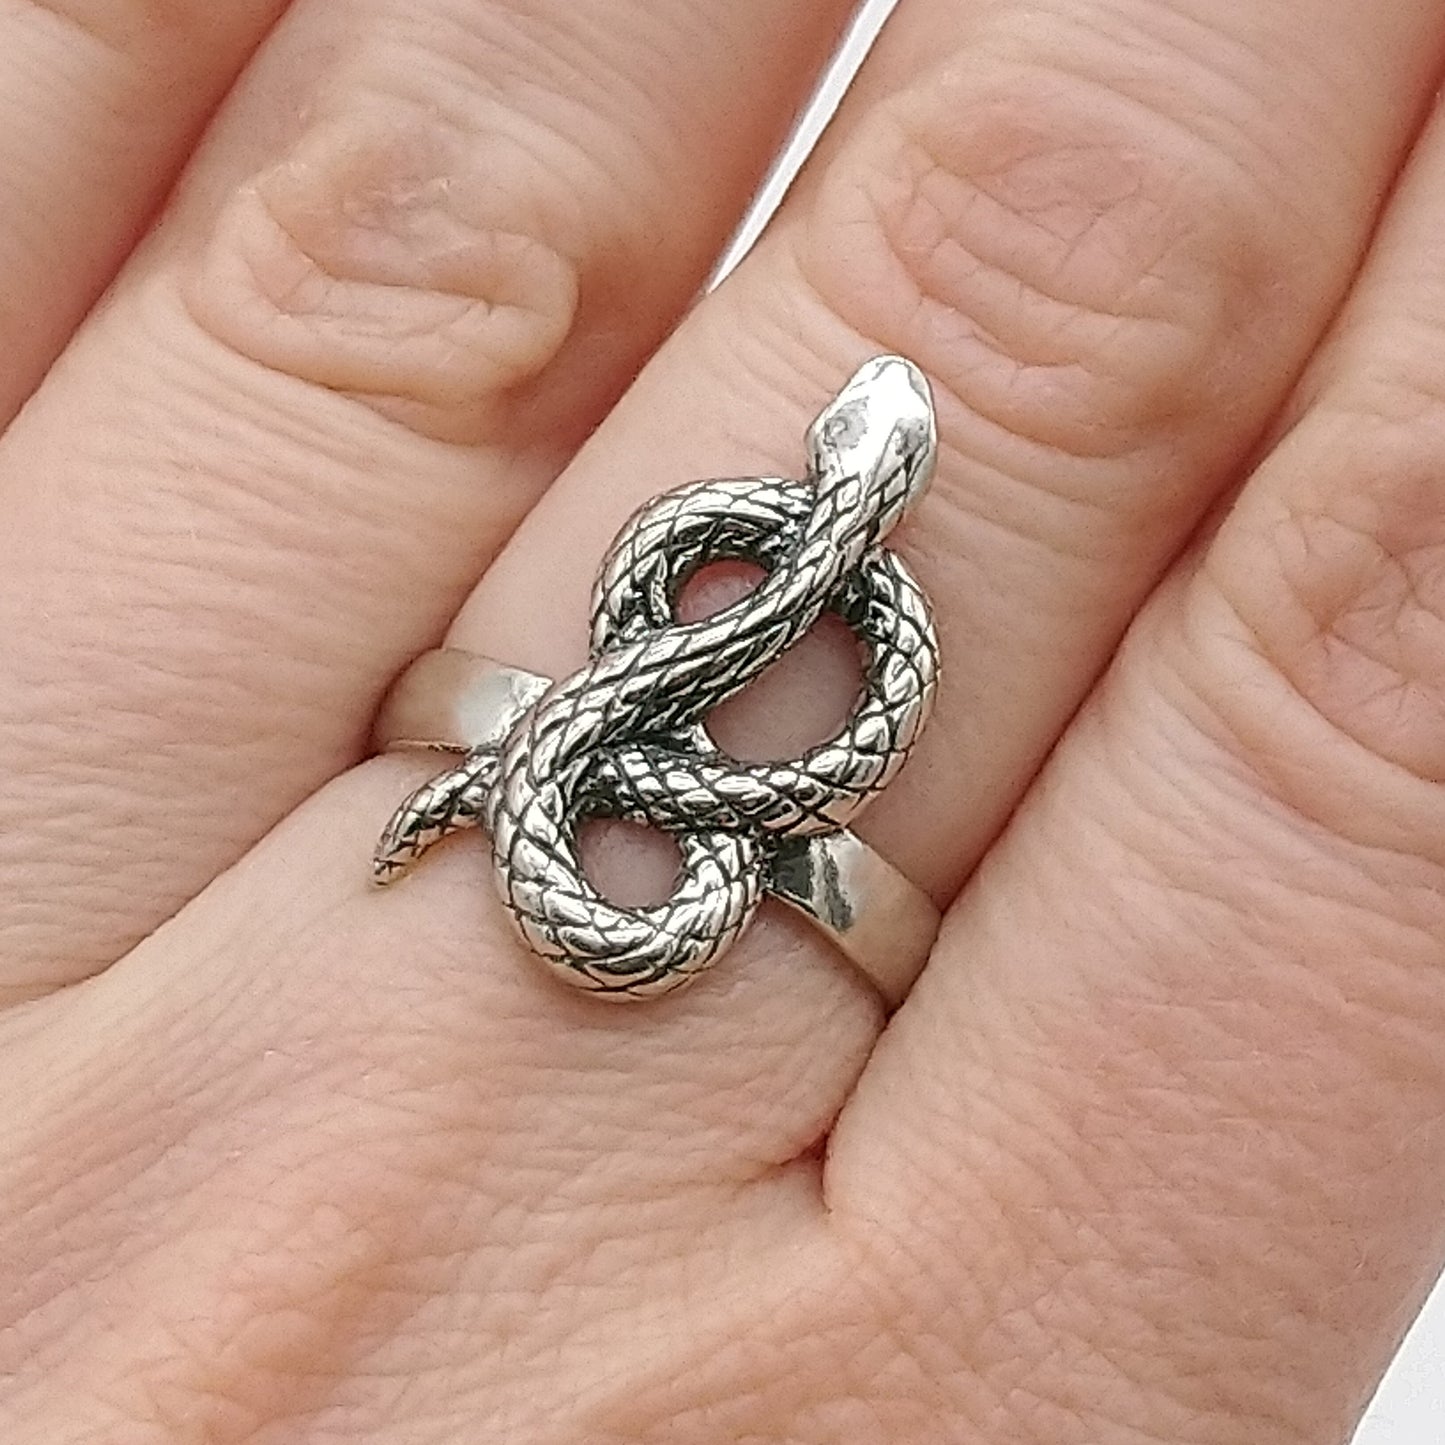 Snake - Silver Ring